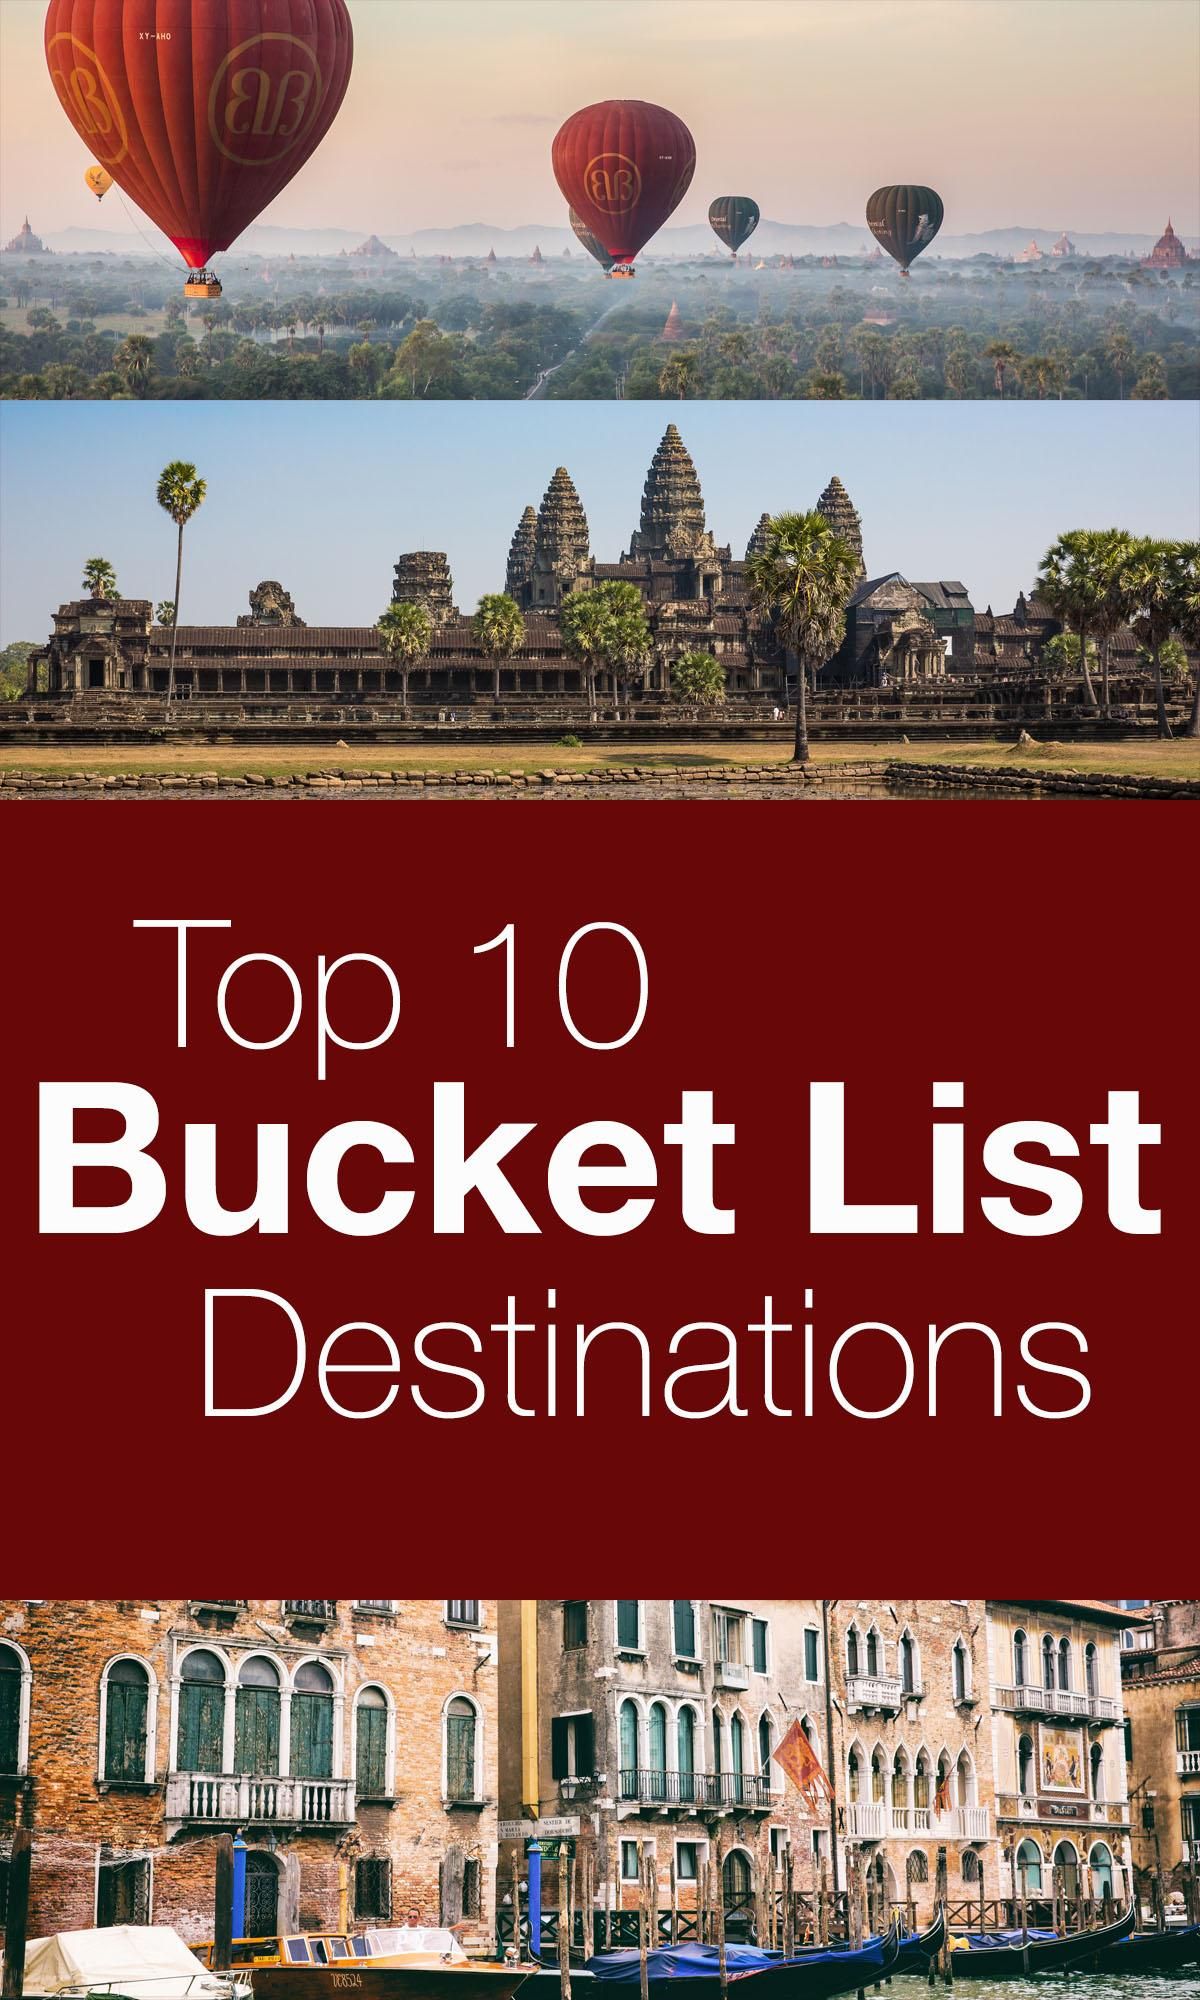 Top 10 Bucket List Destinations